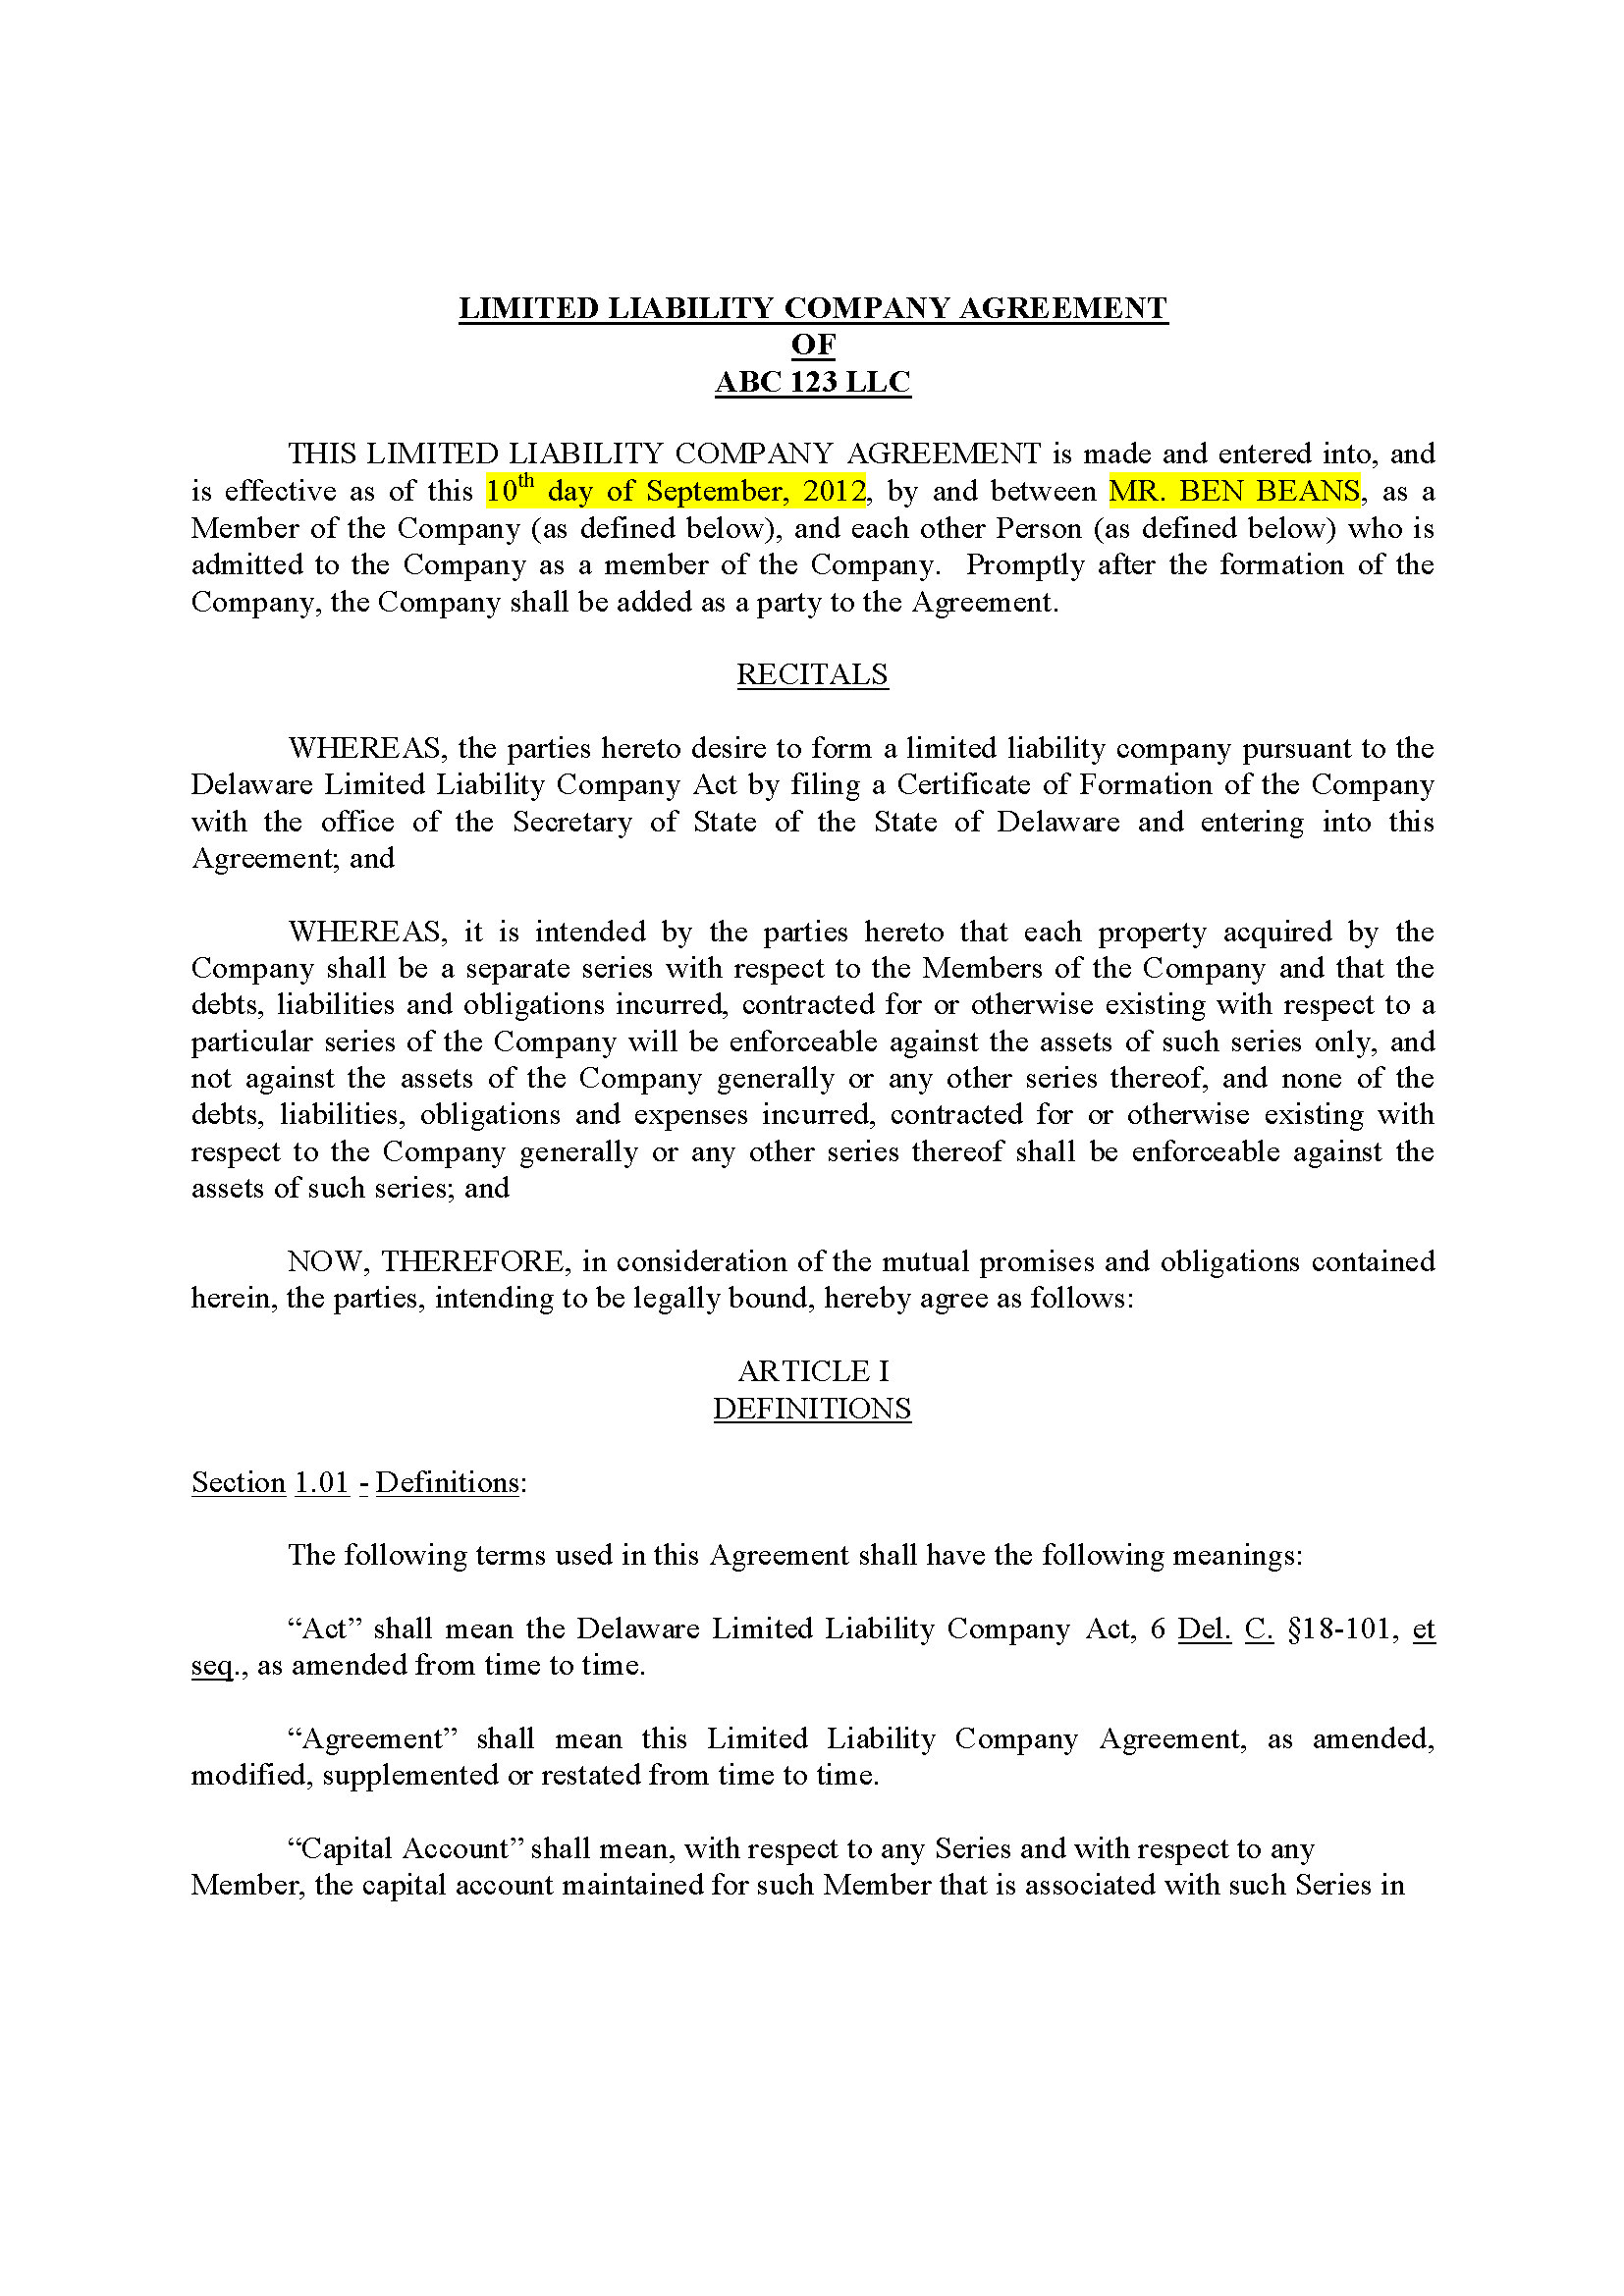 Illinois LLC Operating Agreement (39 pg)Private Placement Memorandum